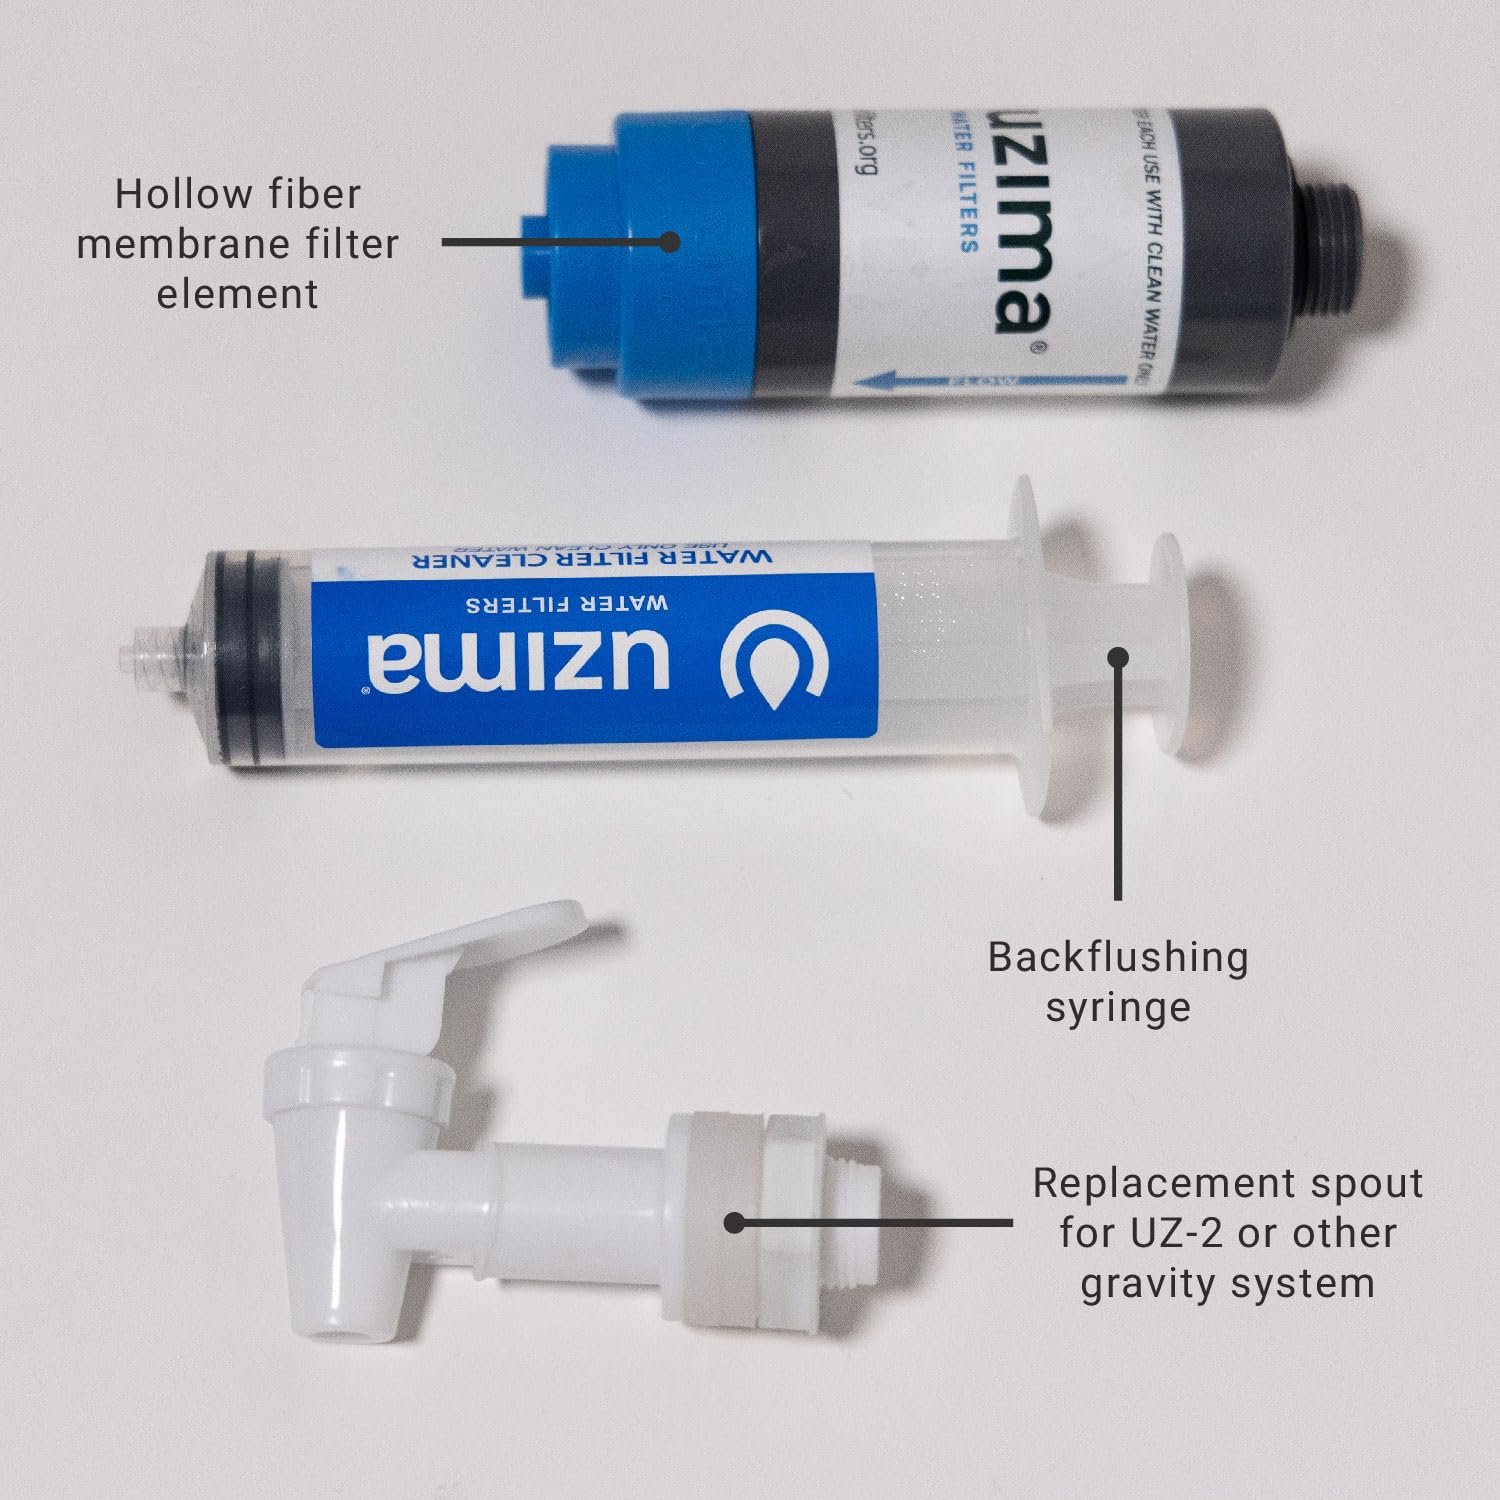 UZ-1 Water Filter Cartridge Review